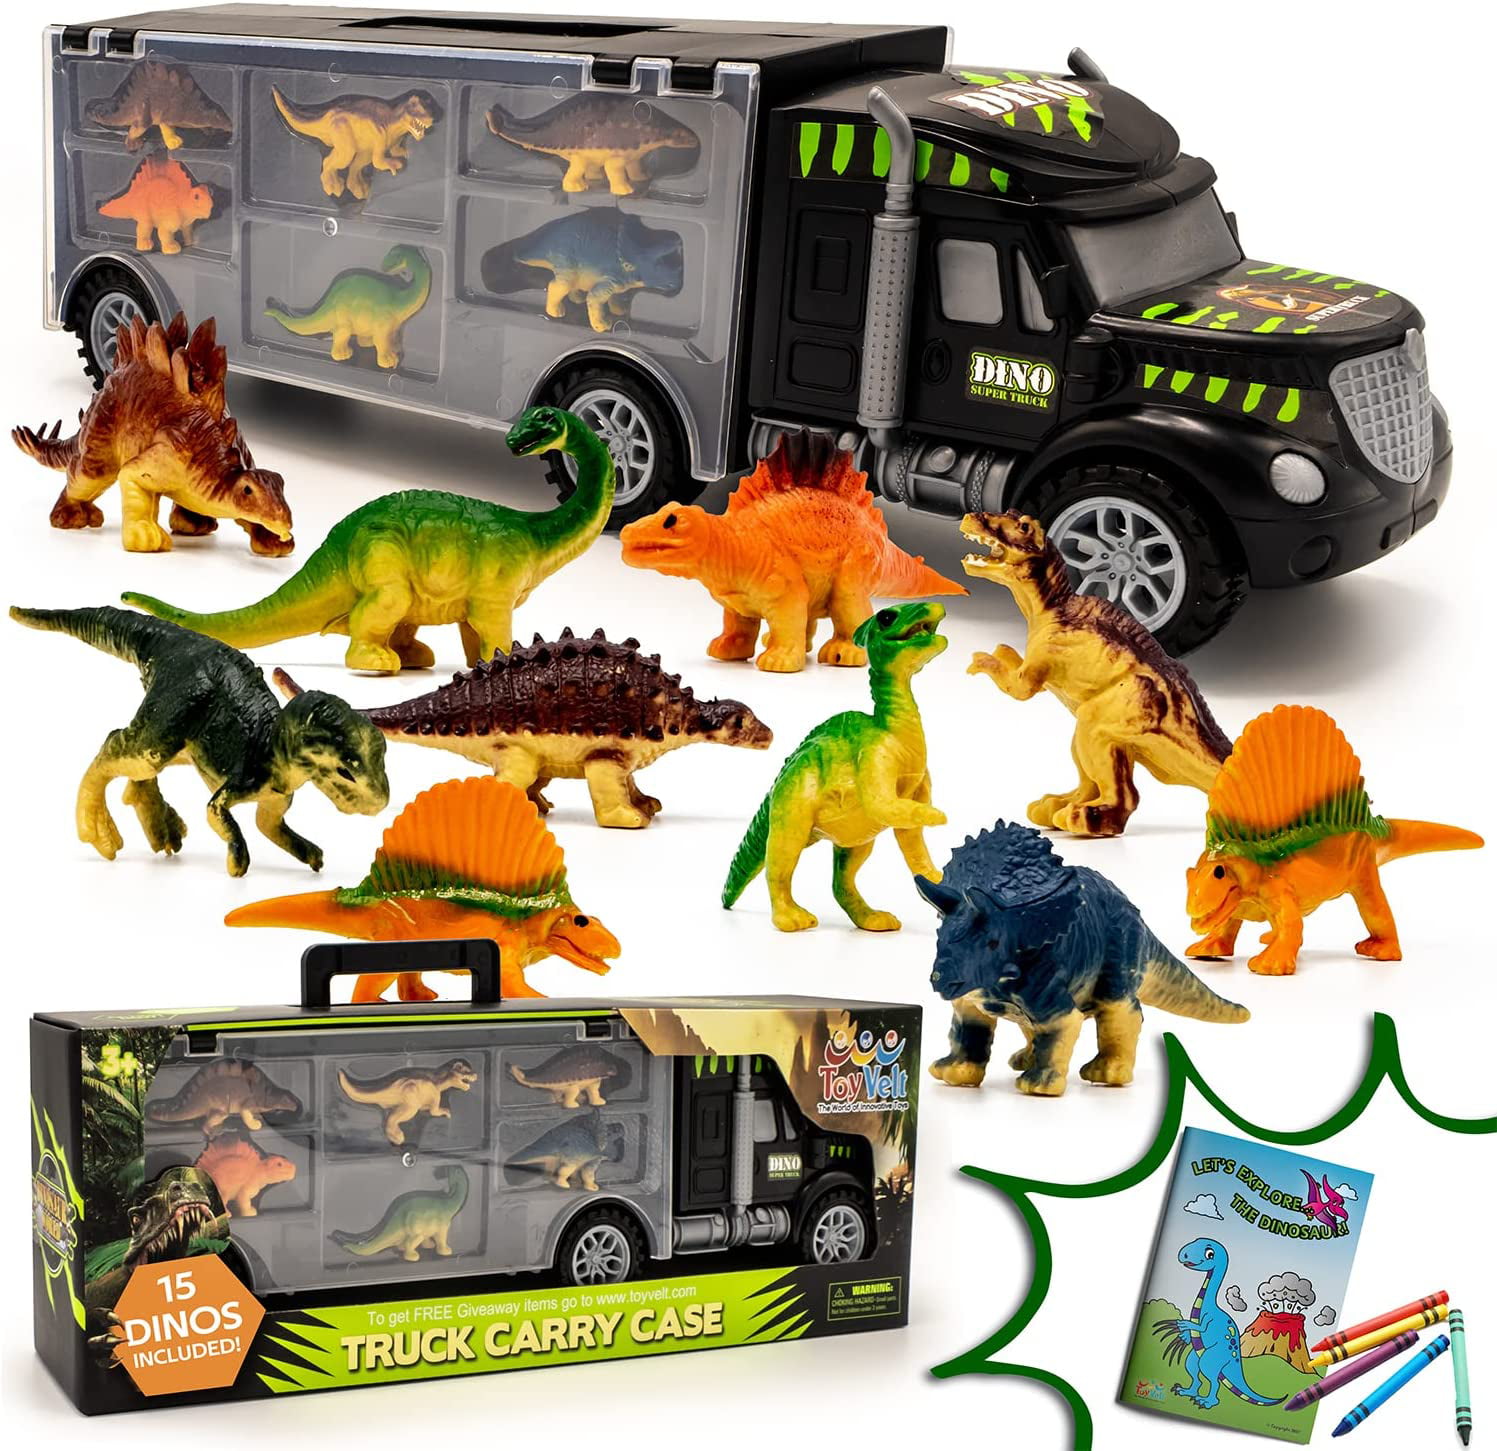 TOYVELT / Dinosaur Toys for Kids 3-5 - Dinosaur Truck Carrier Toy with 15 Dinosaur - image 1 of 5